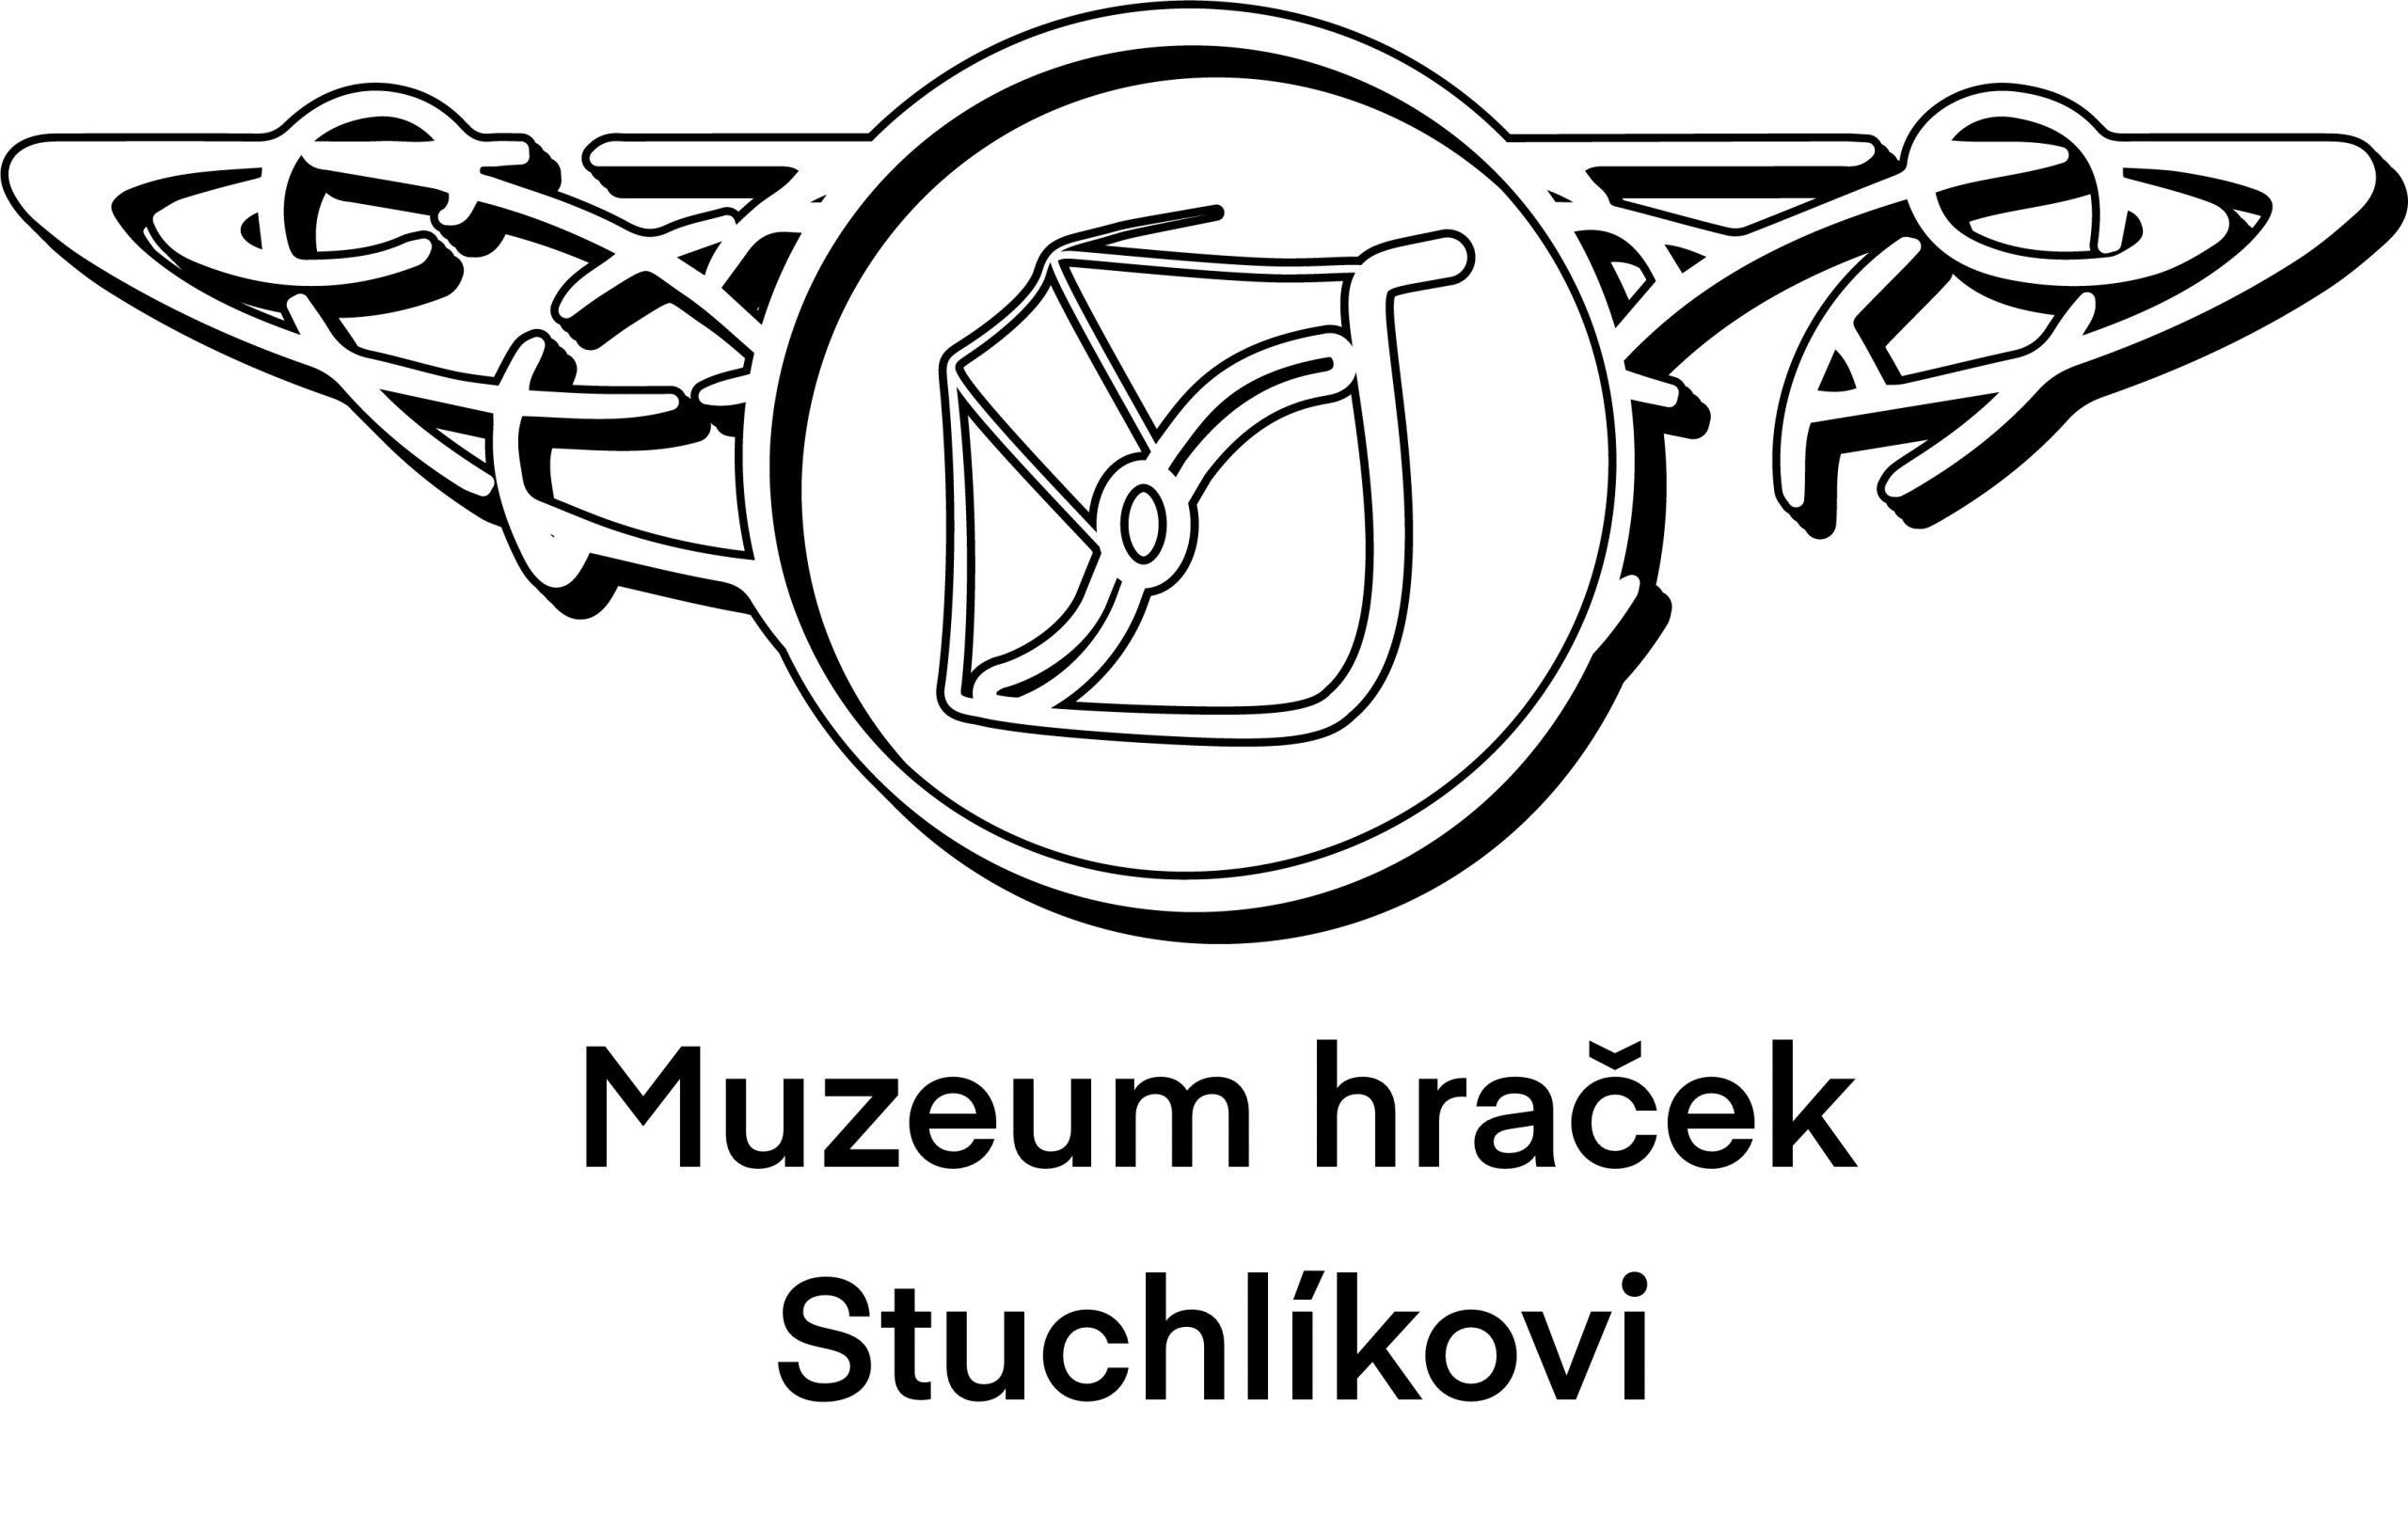 logo-muzeum